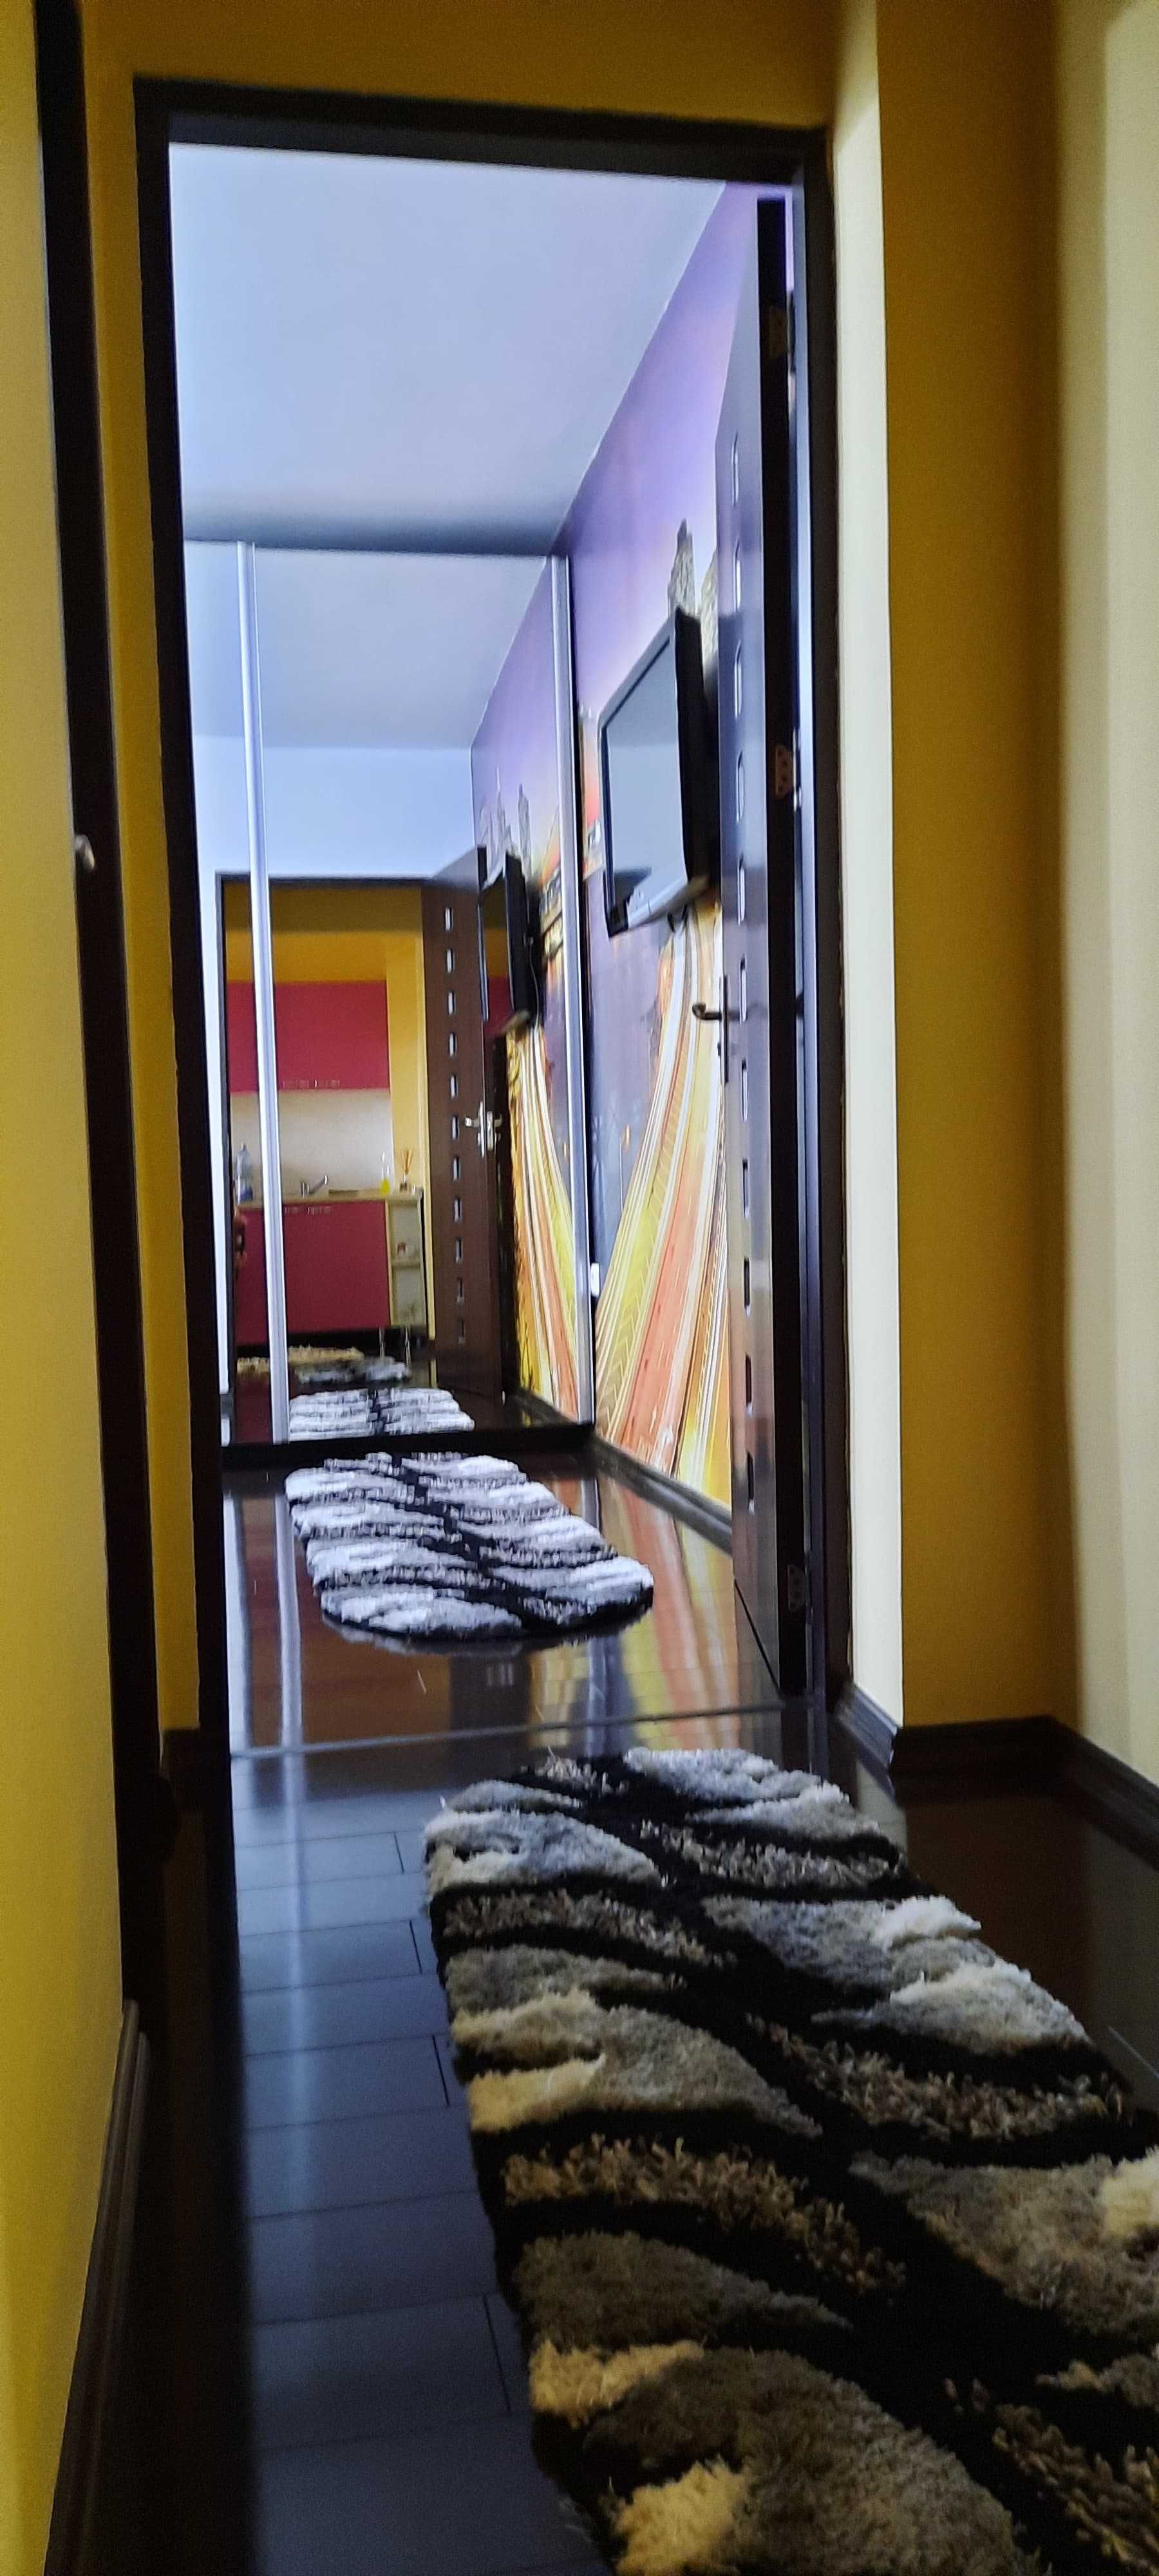 Cazare in regim hotelier, apartament in Petrosani,  zona ultracentrala